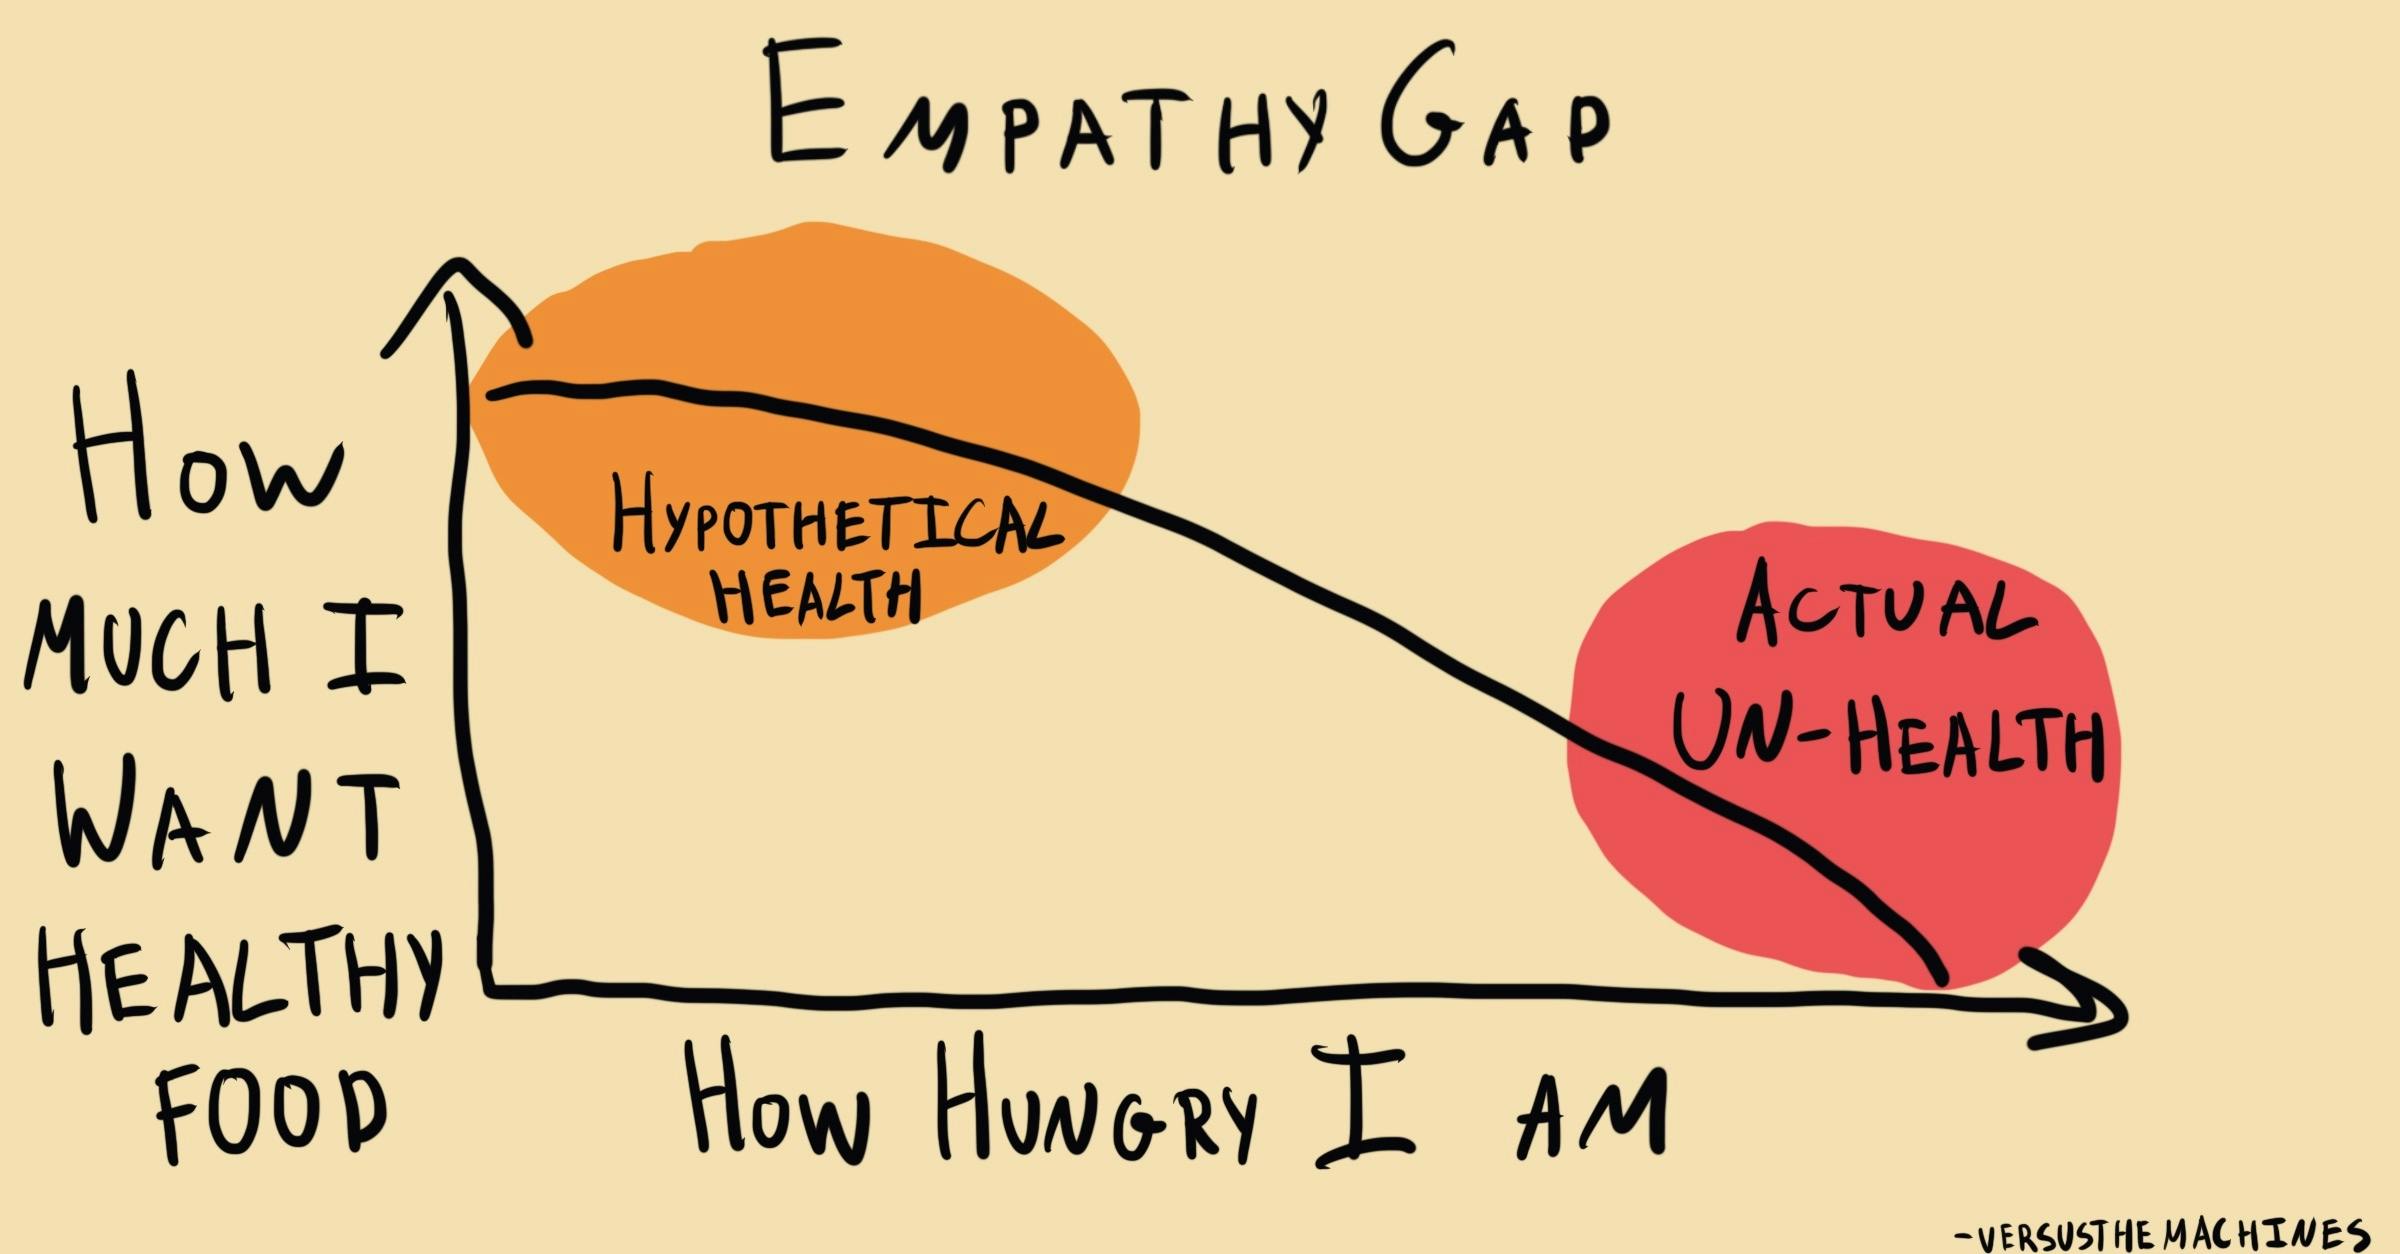 Empathy gap diagram